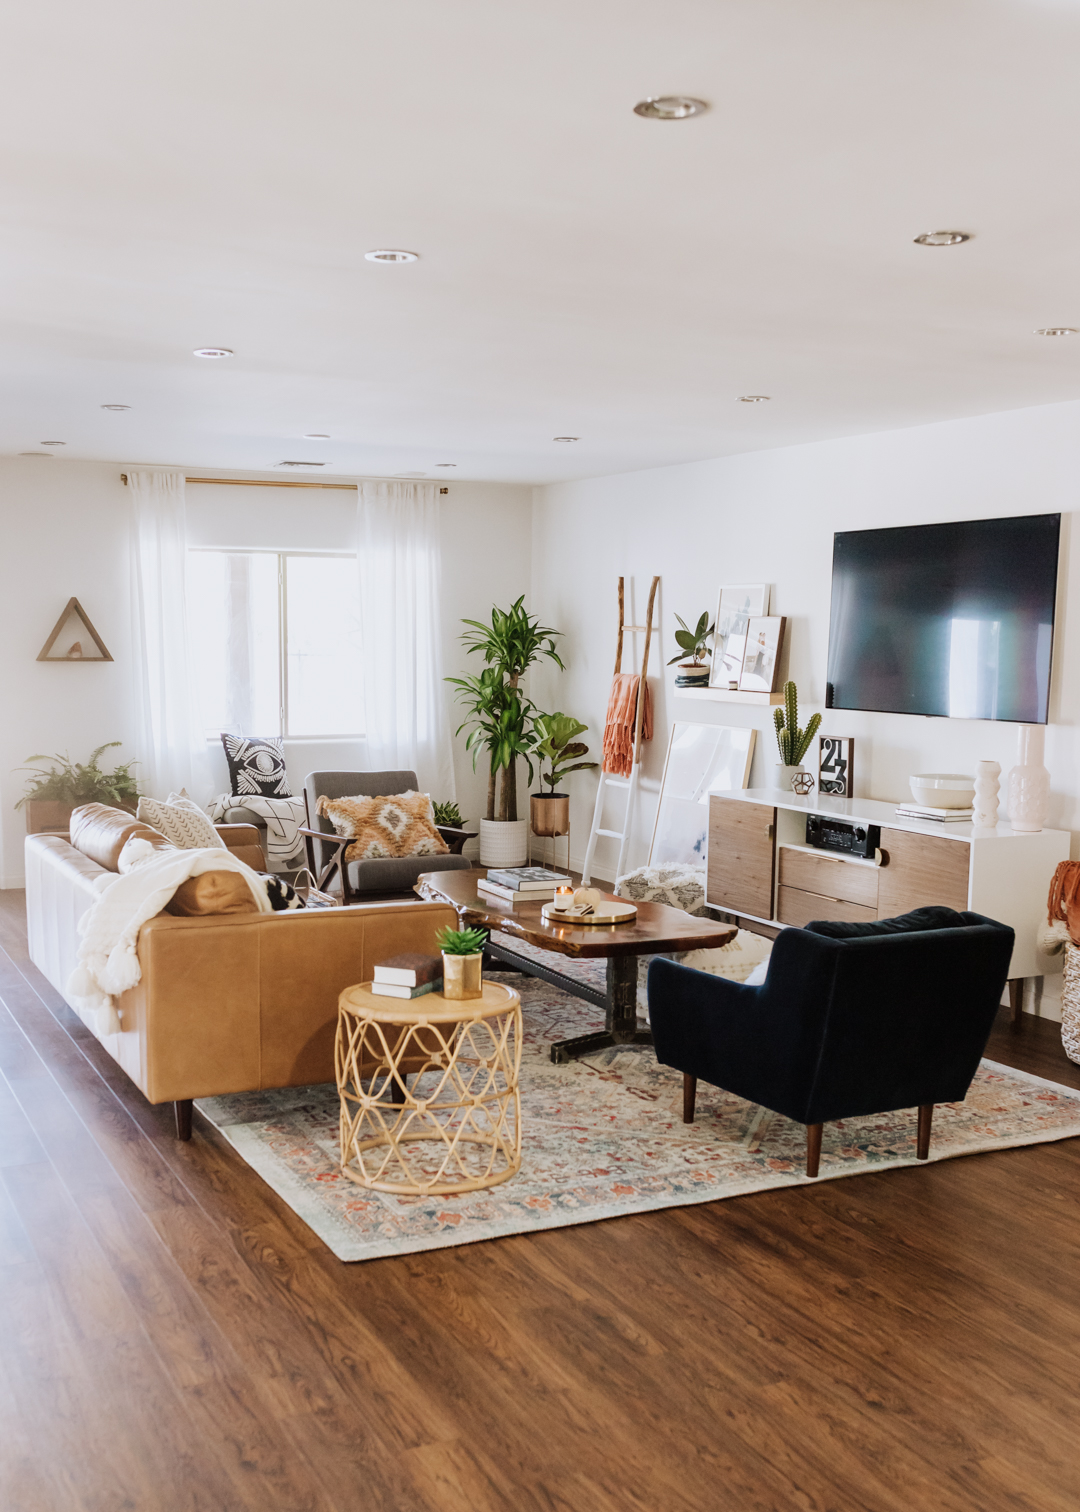 sharing our living room update reveal | thelovedesignedlife.com #livingroom #homedesign #theldlhome